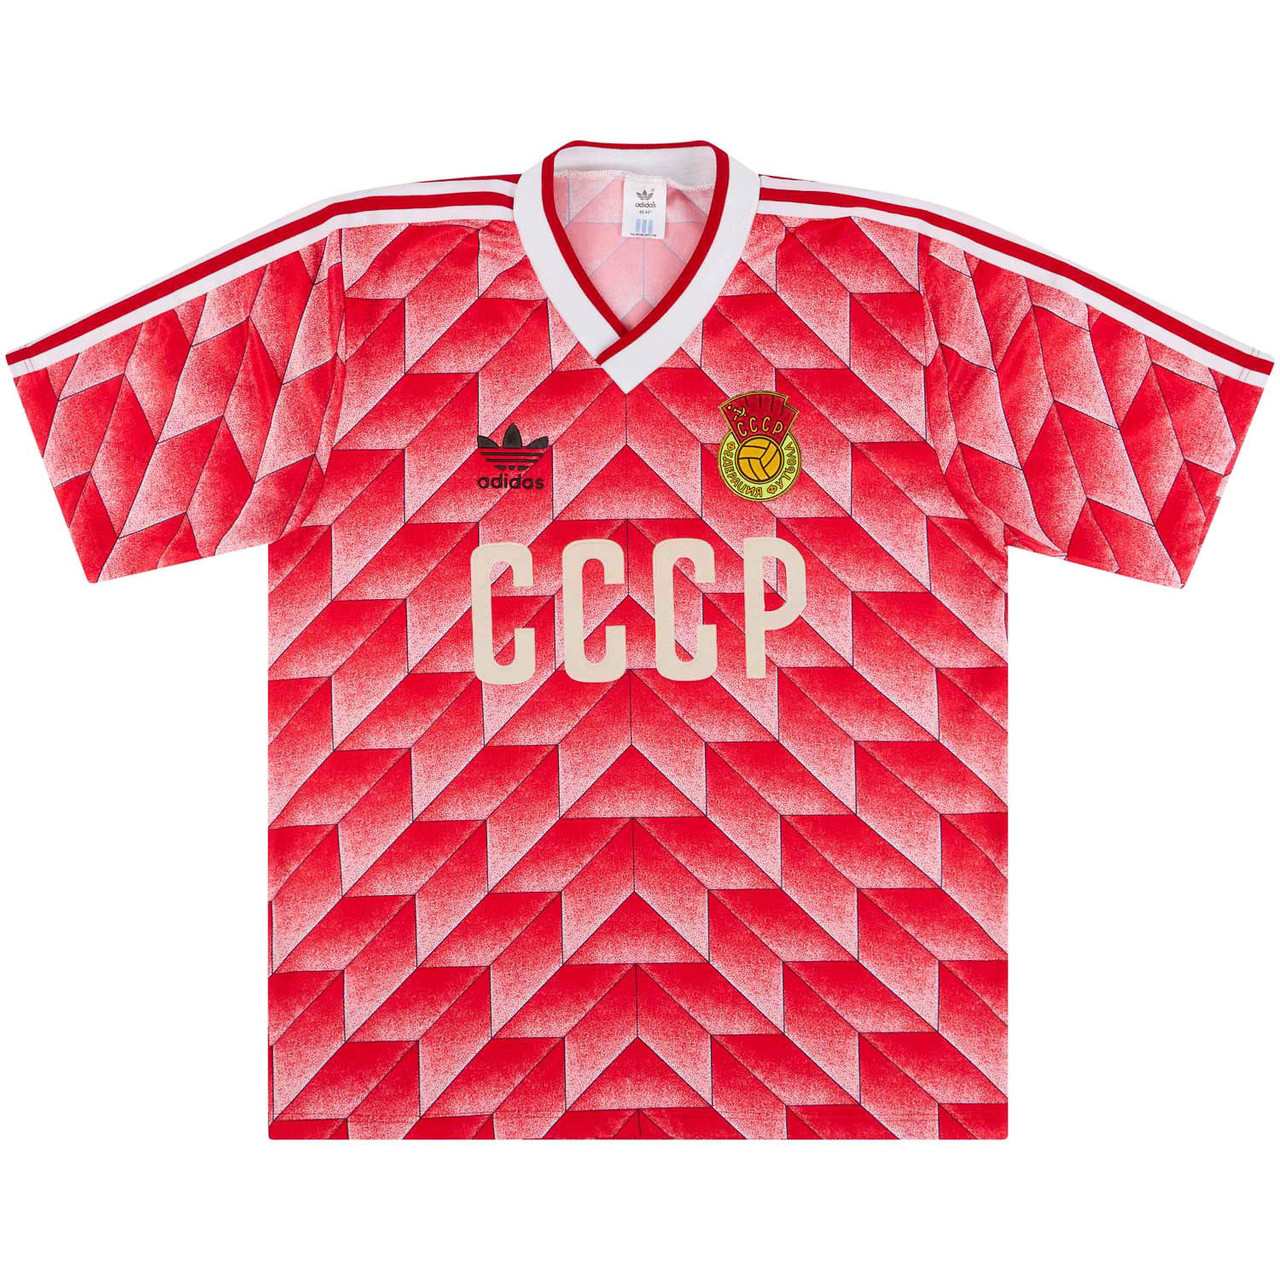 Players Tribune CCCP 1987 1988 Number 9 Home Shirt (Good) L